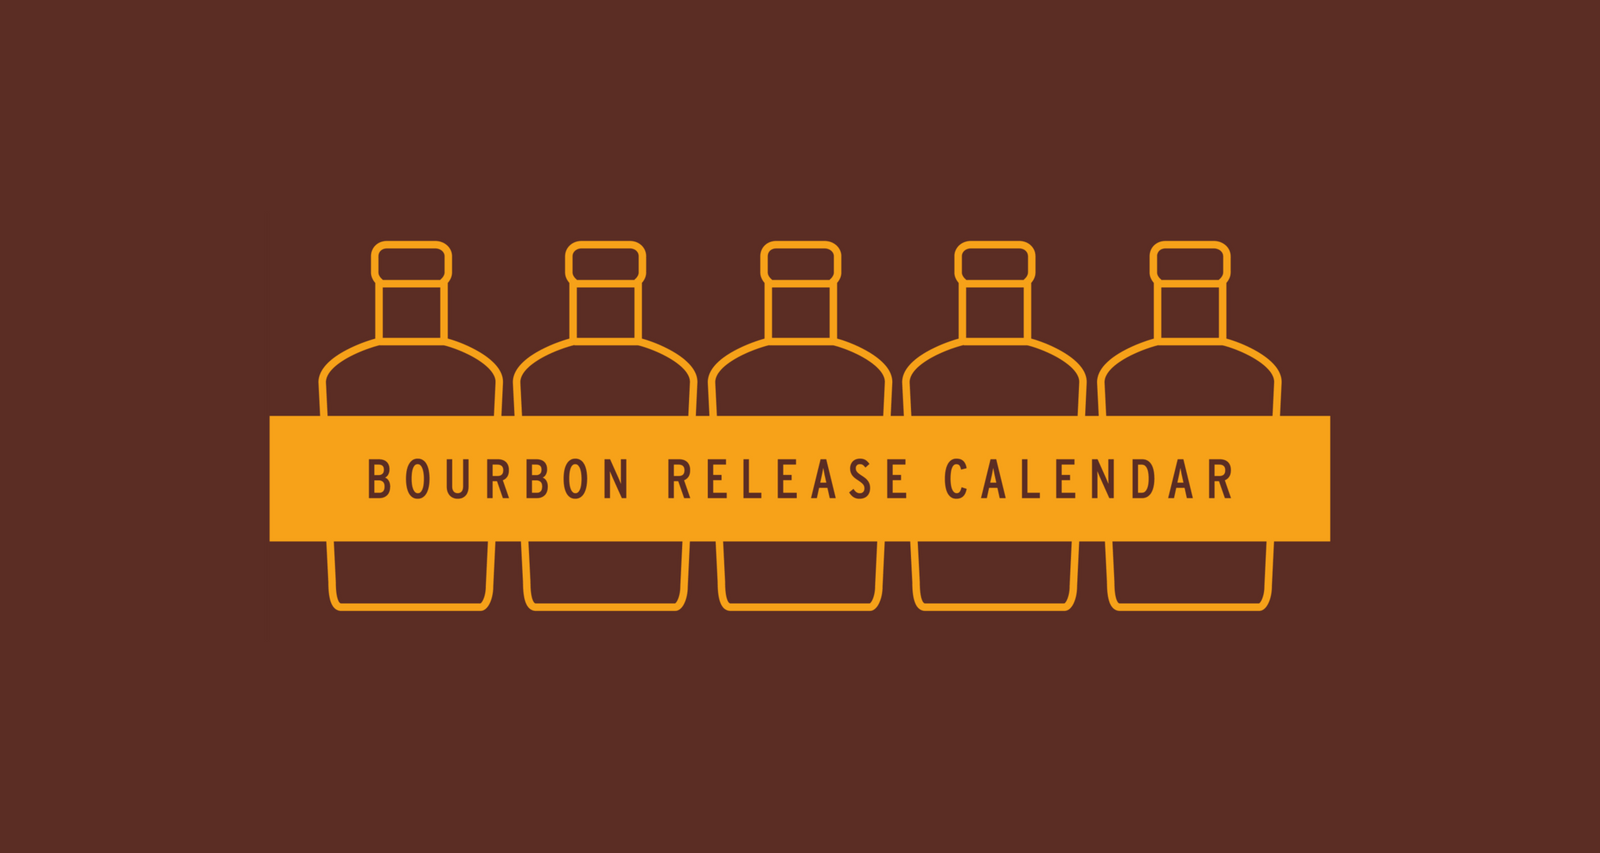 2017 Bourbon Release Calendar - De Wine Spot | DWS - Drams/Whiskey, Wines, Sake